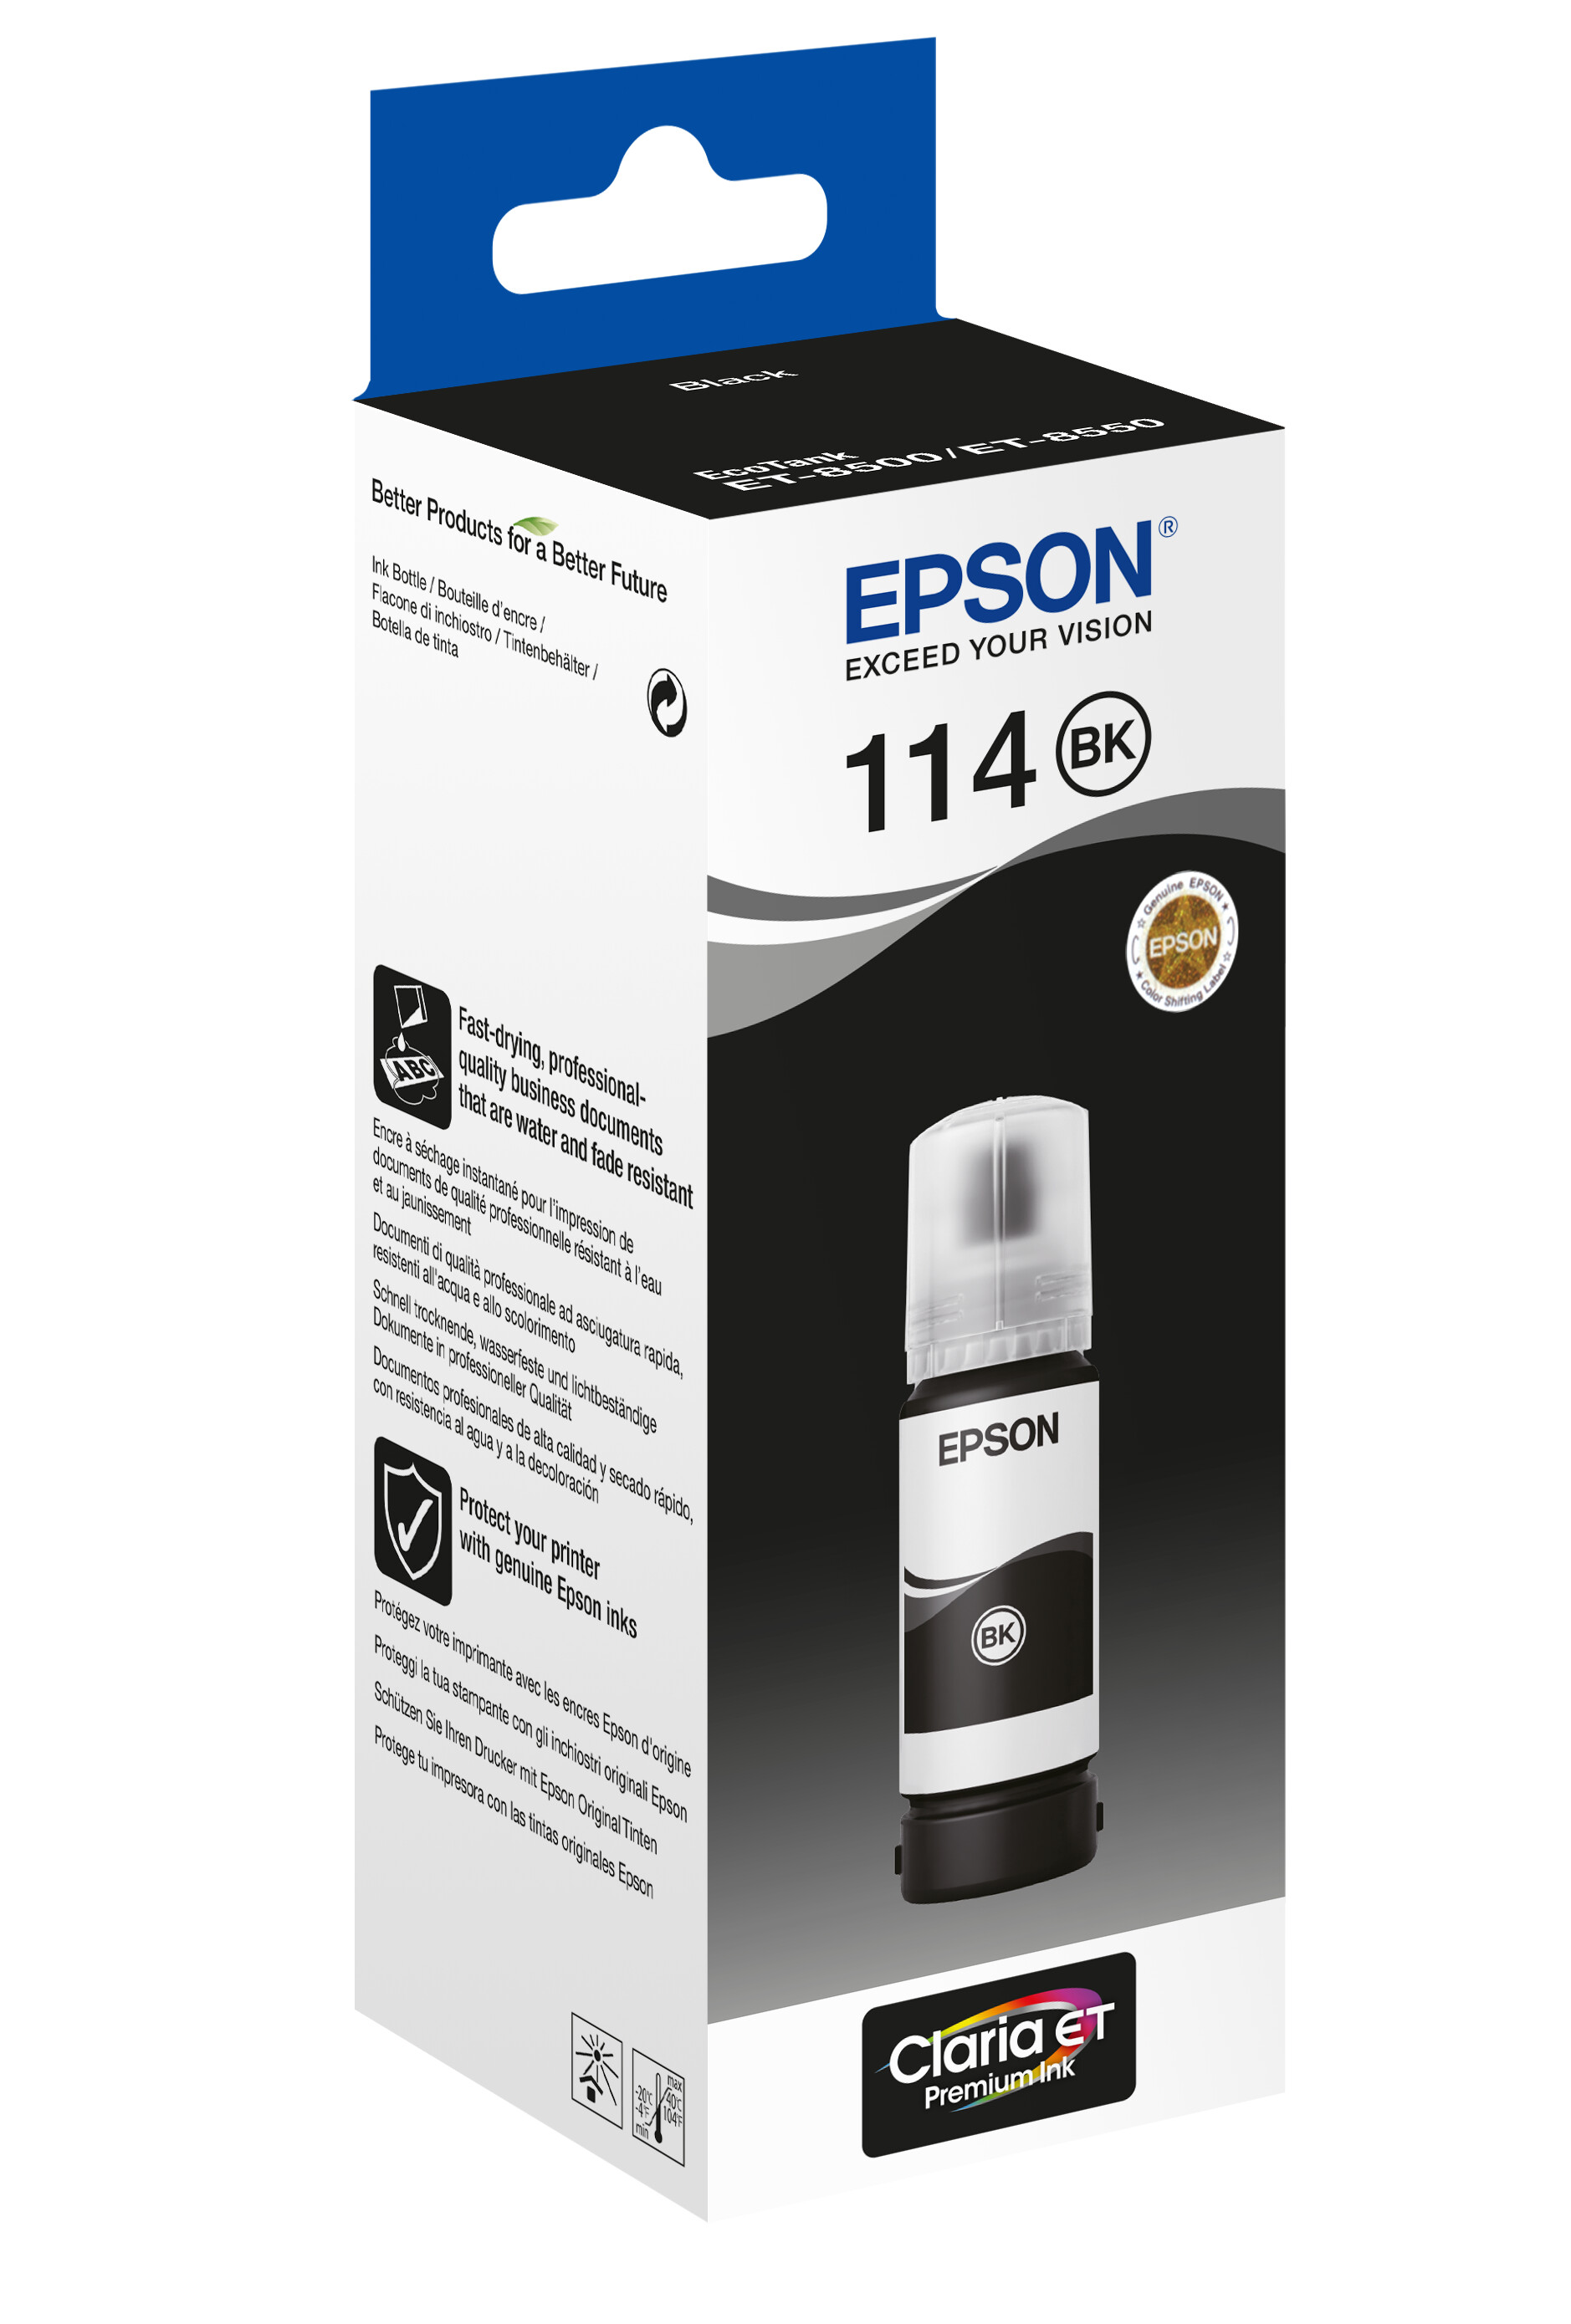 EPSON Ink/114 EcoTank Pigment Black ink bottle